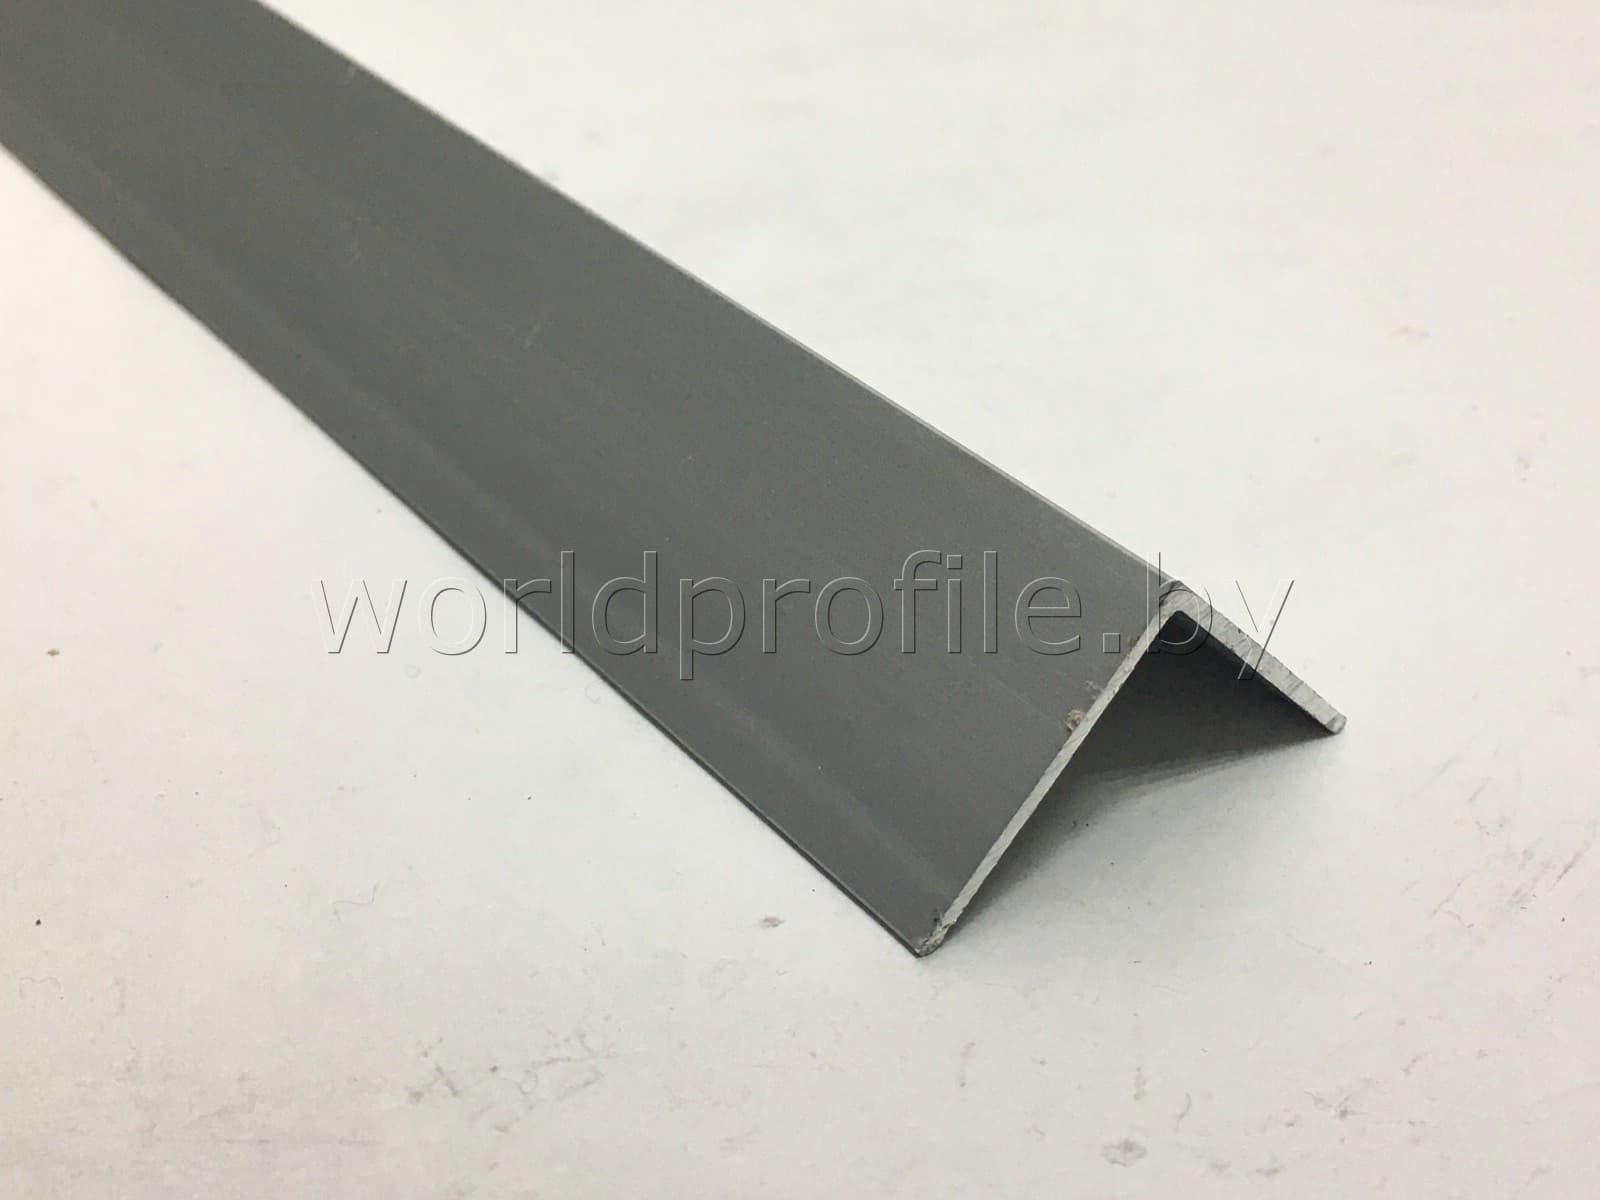 Уголок алюминиевый 25х25х1,2 (3,0 м), цвет серебро